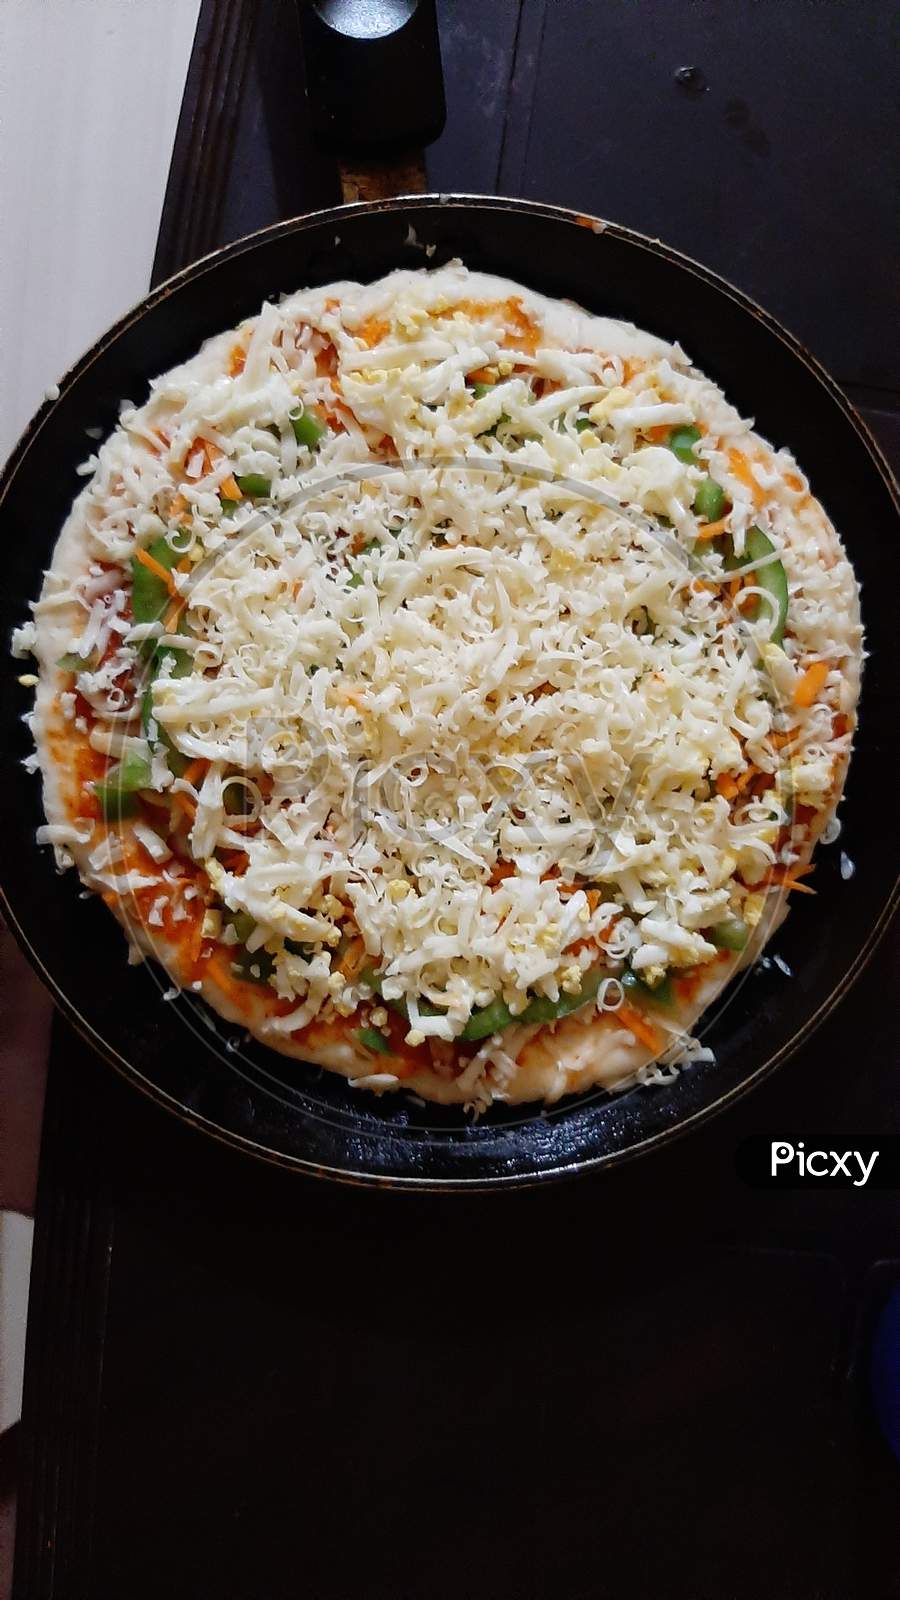 Vegetable pizza